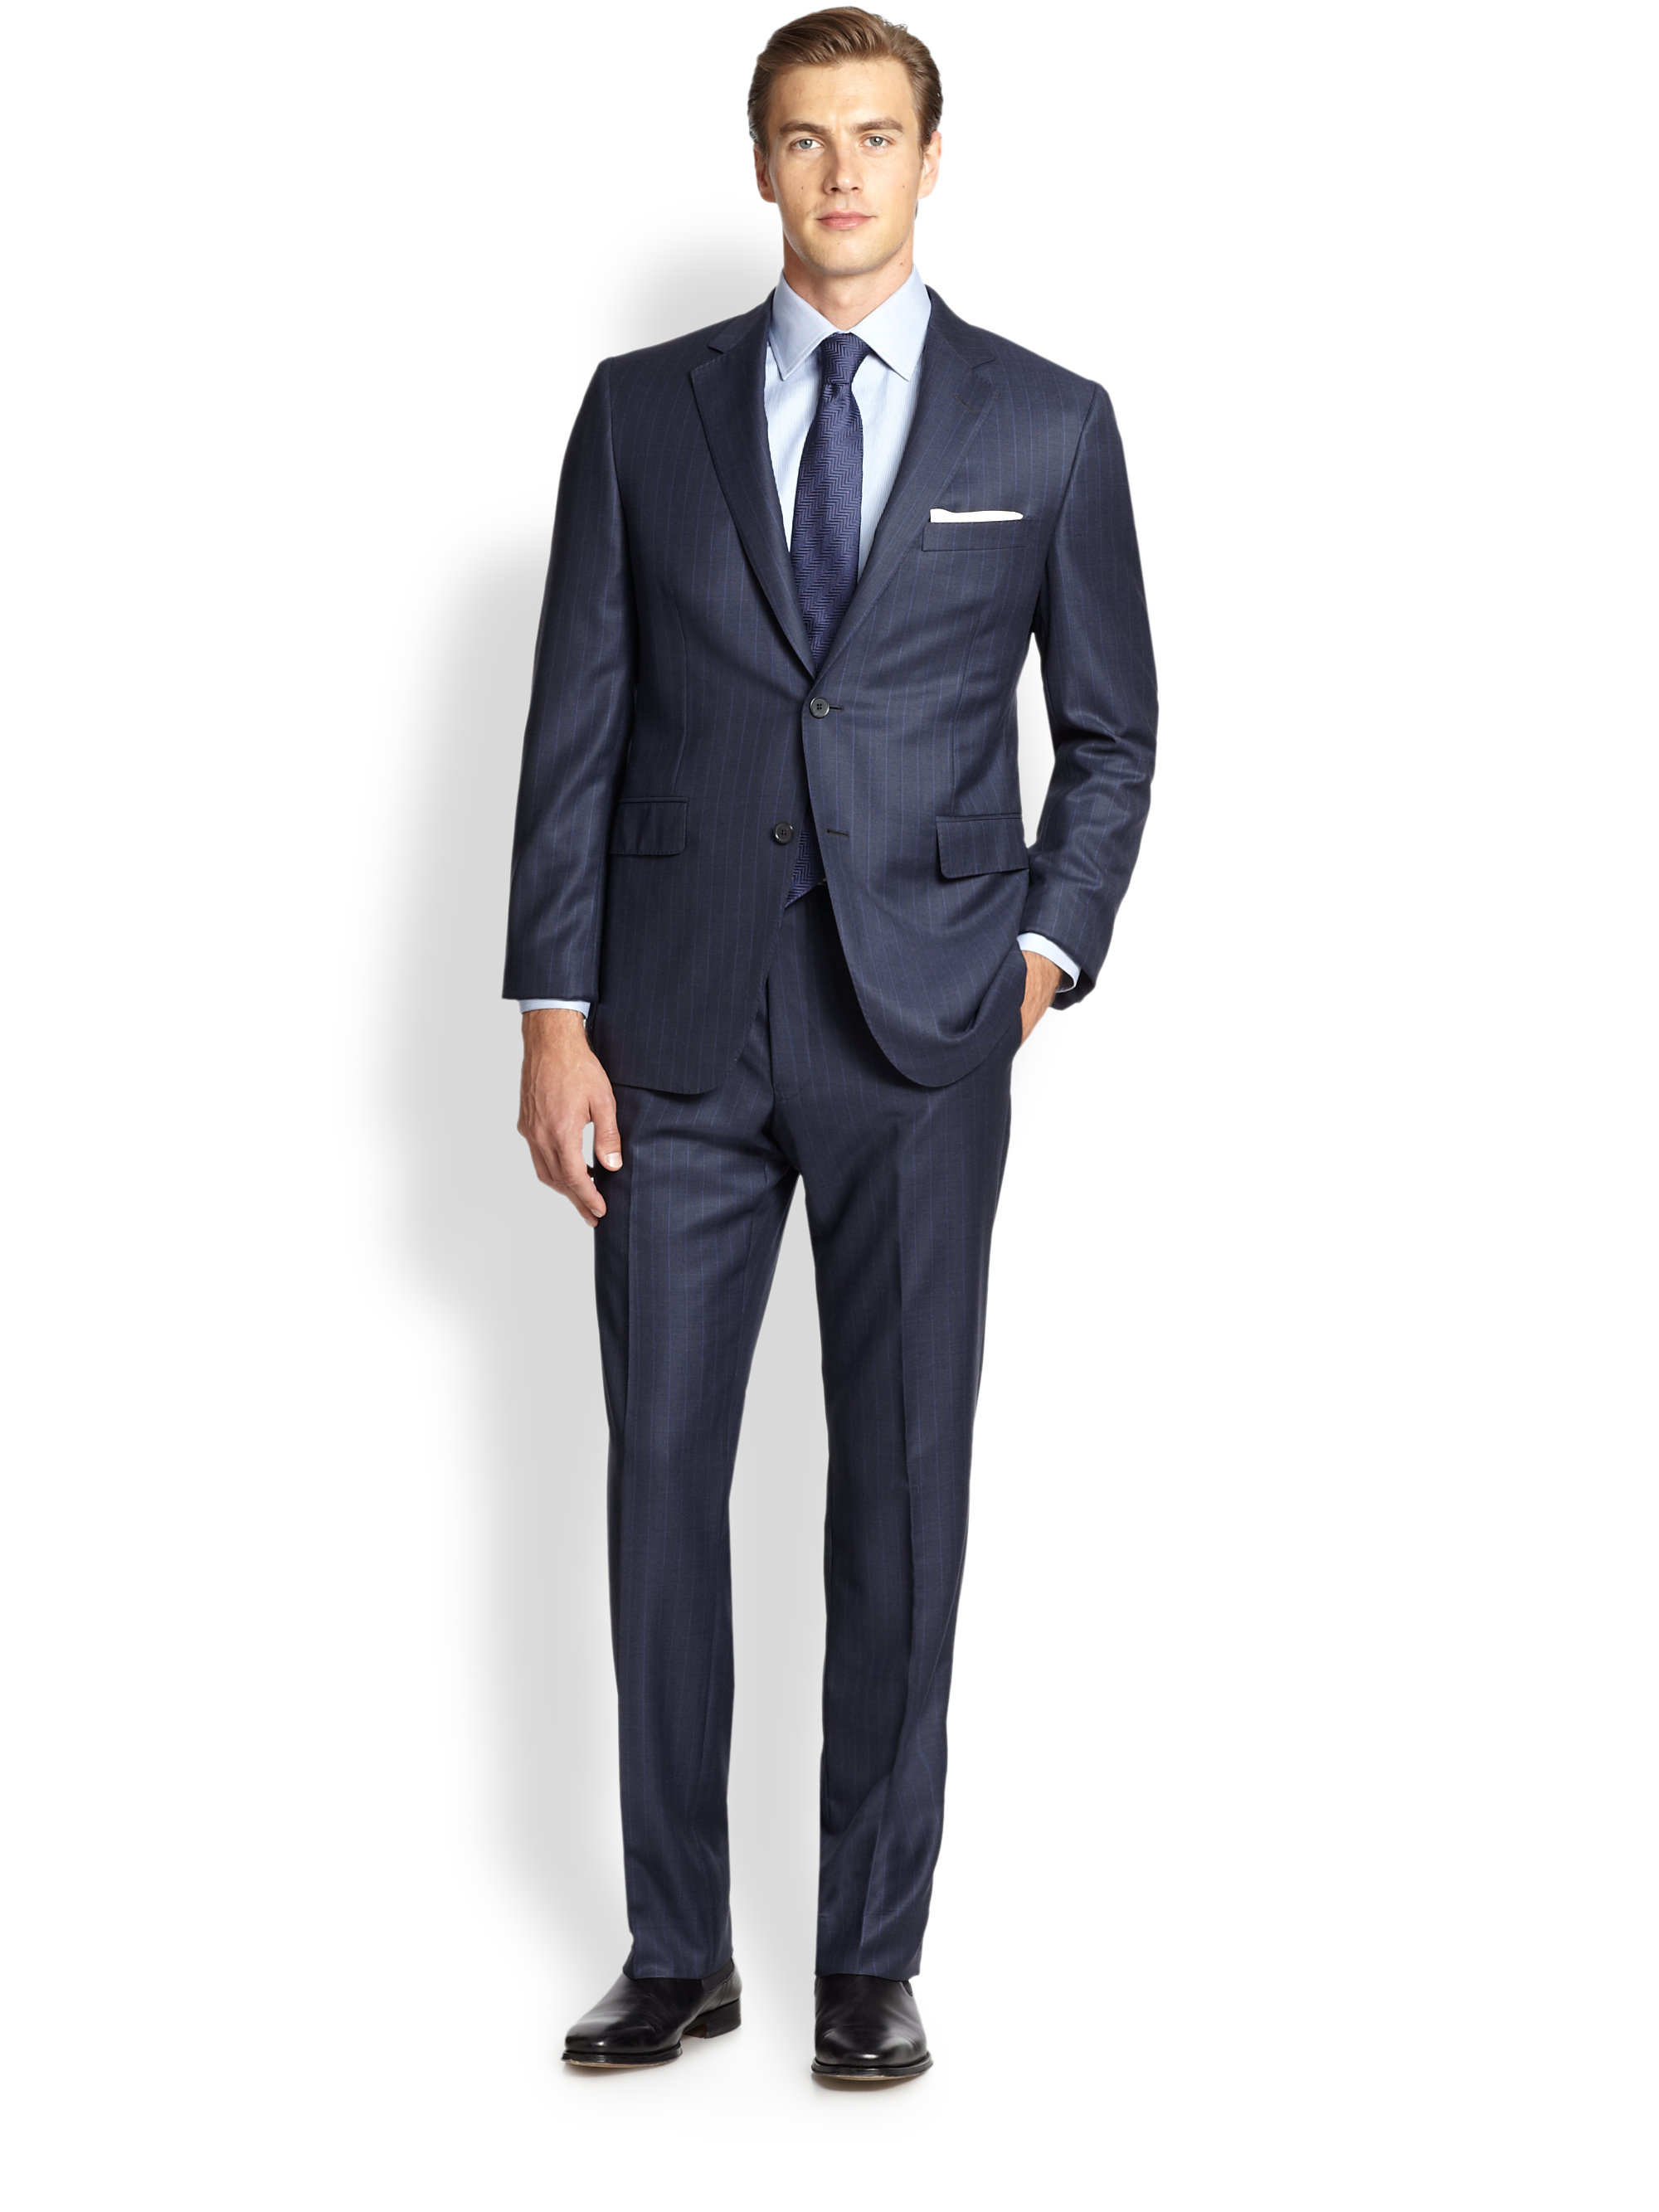 Lyst - Saks Fifth Avenue Samuelsohn Pinstriped Wool Suit in Blue for Men